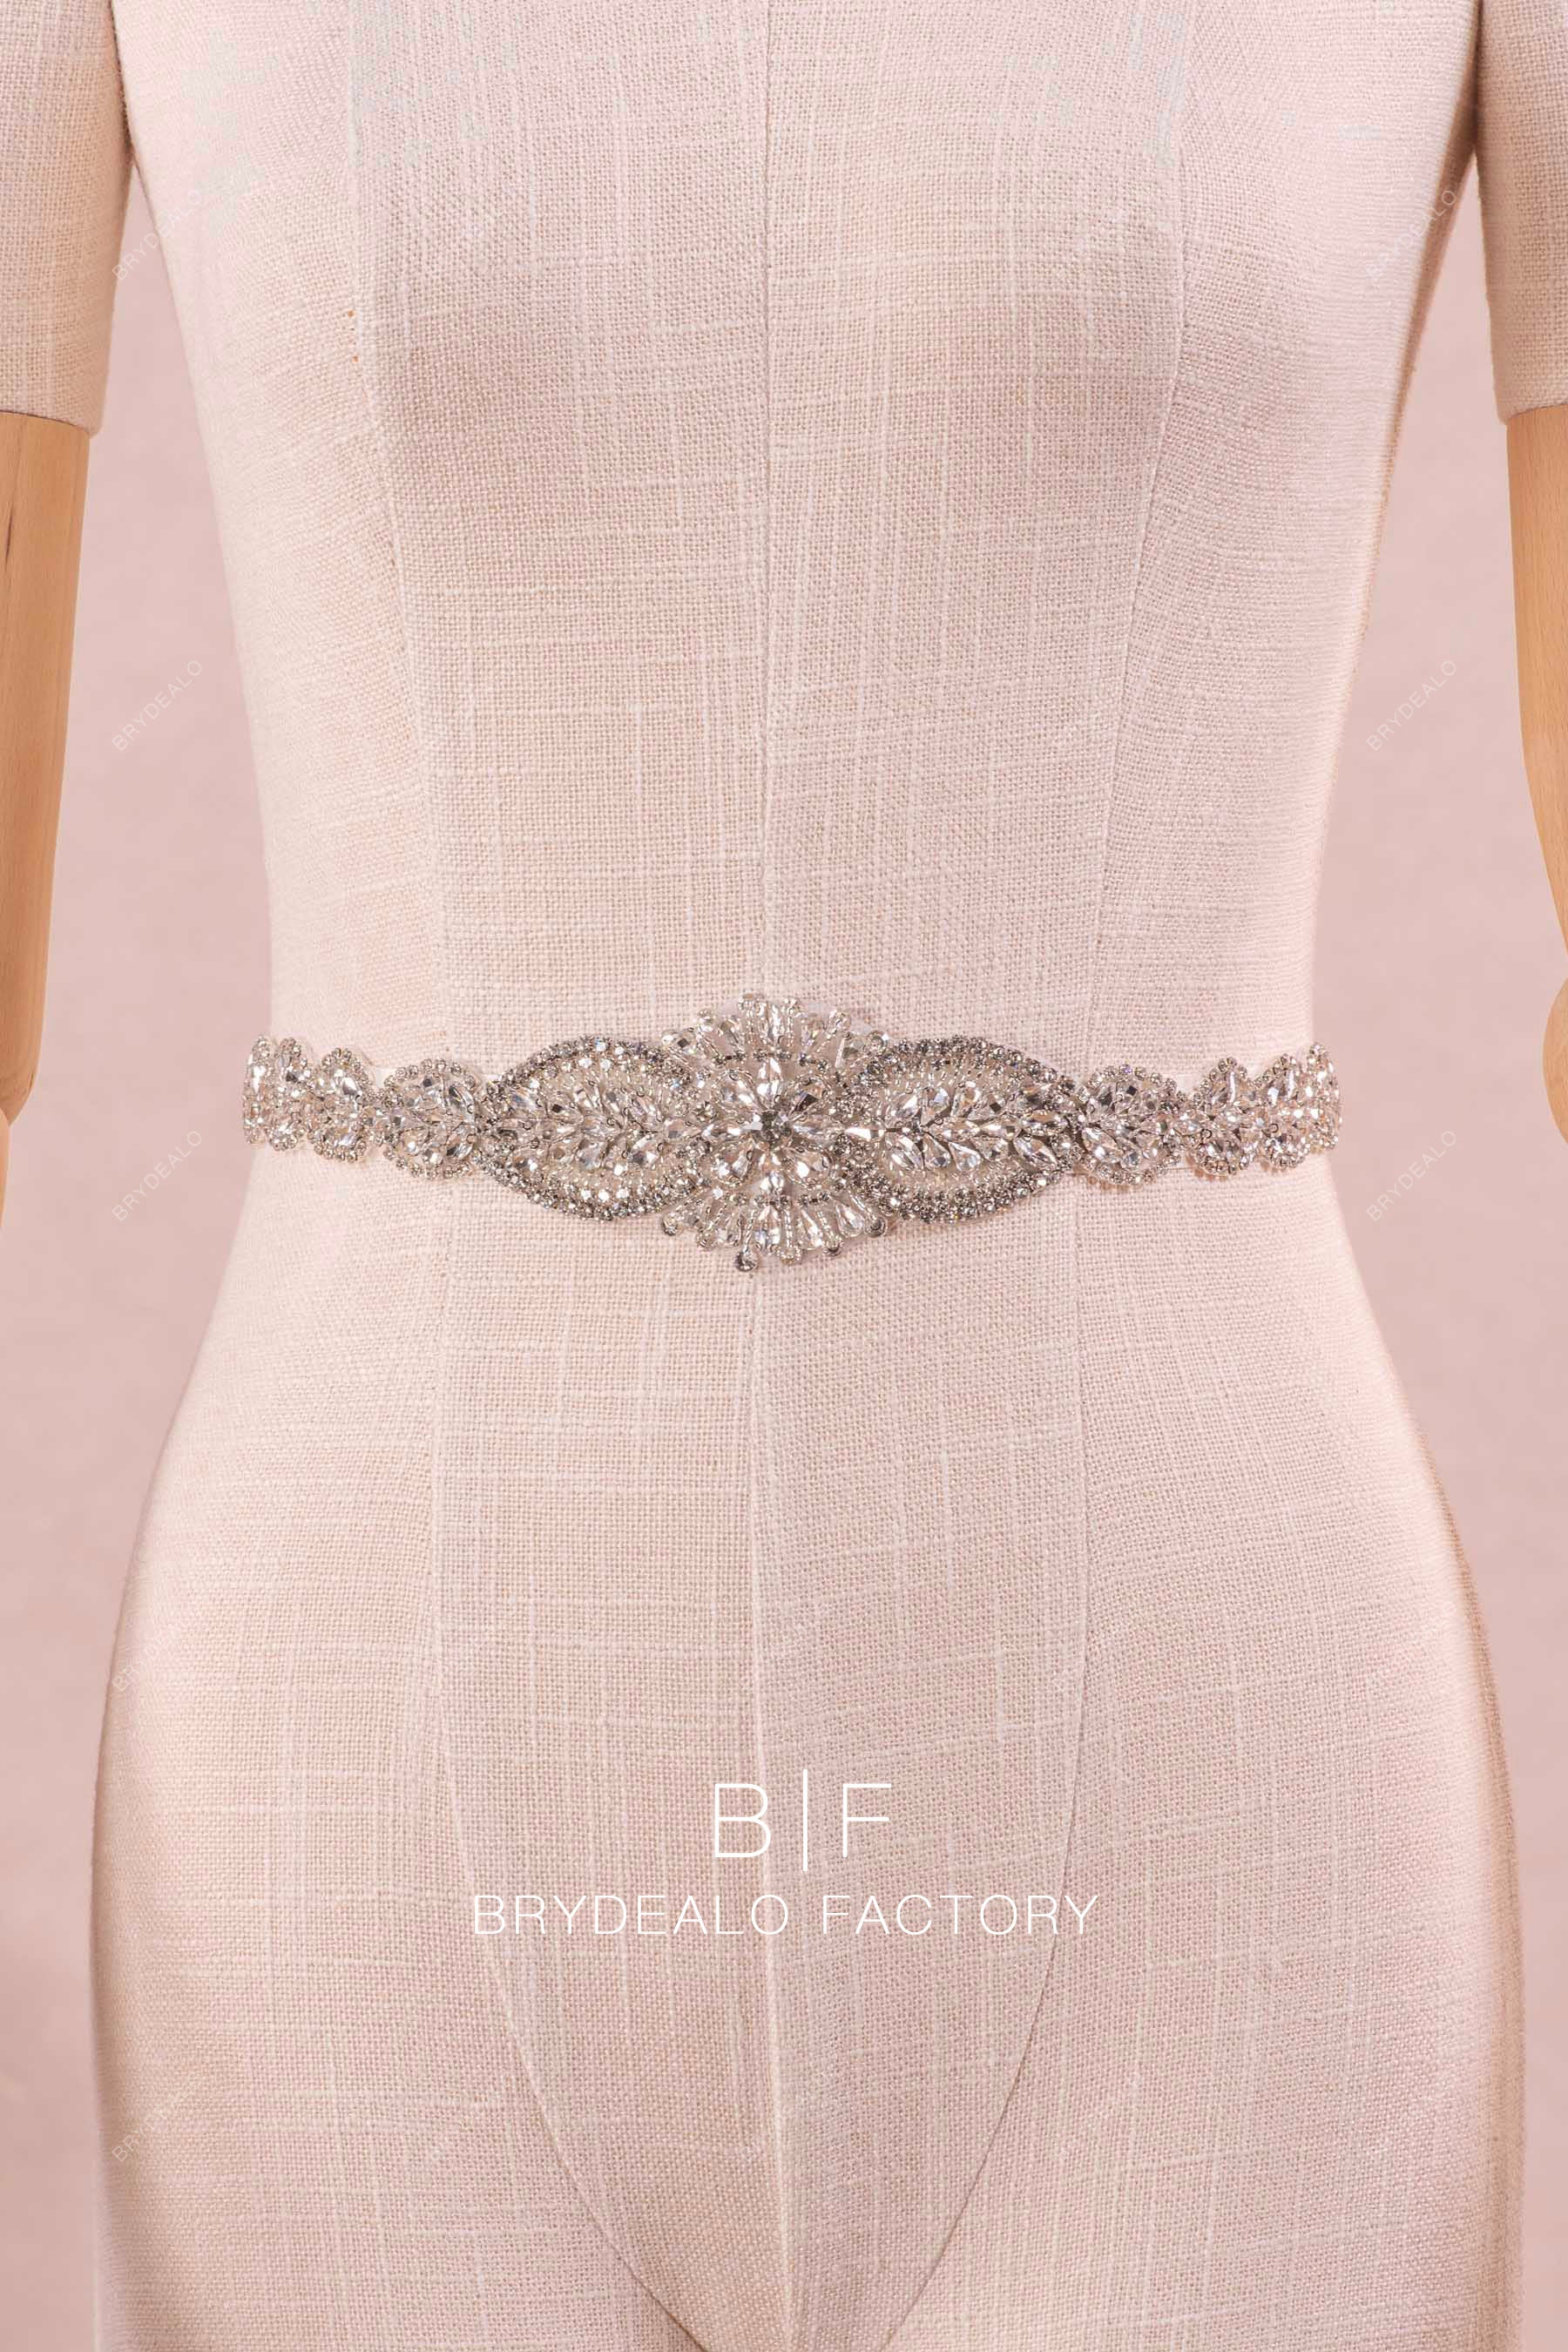 sparkling rhinestone wedding dress belt